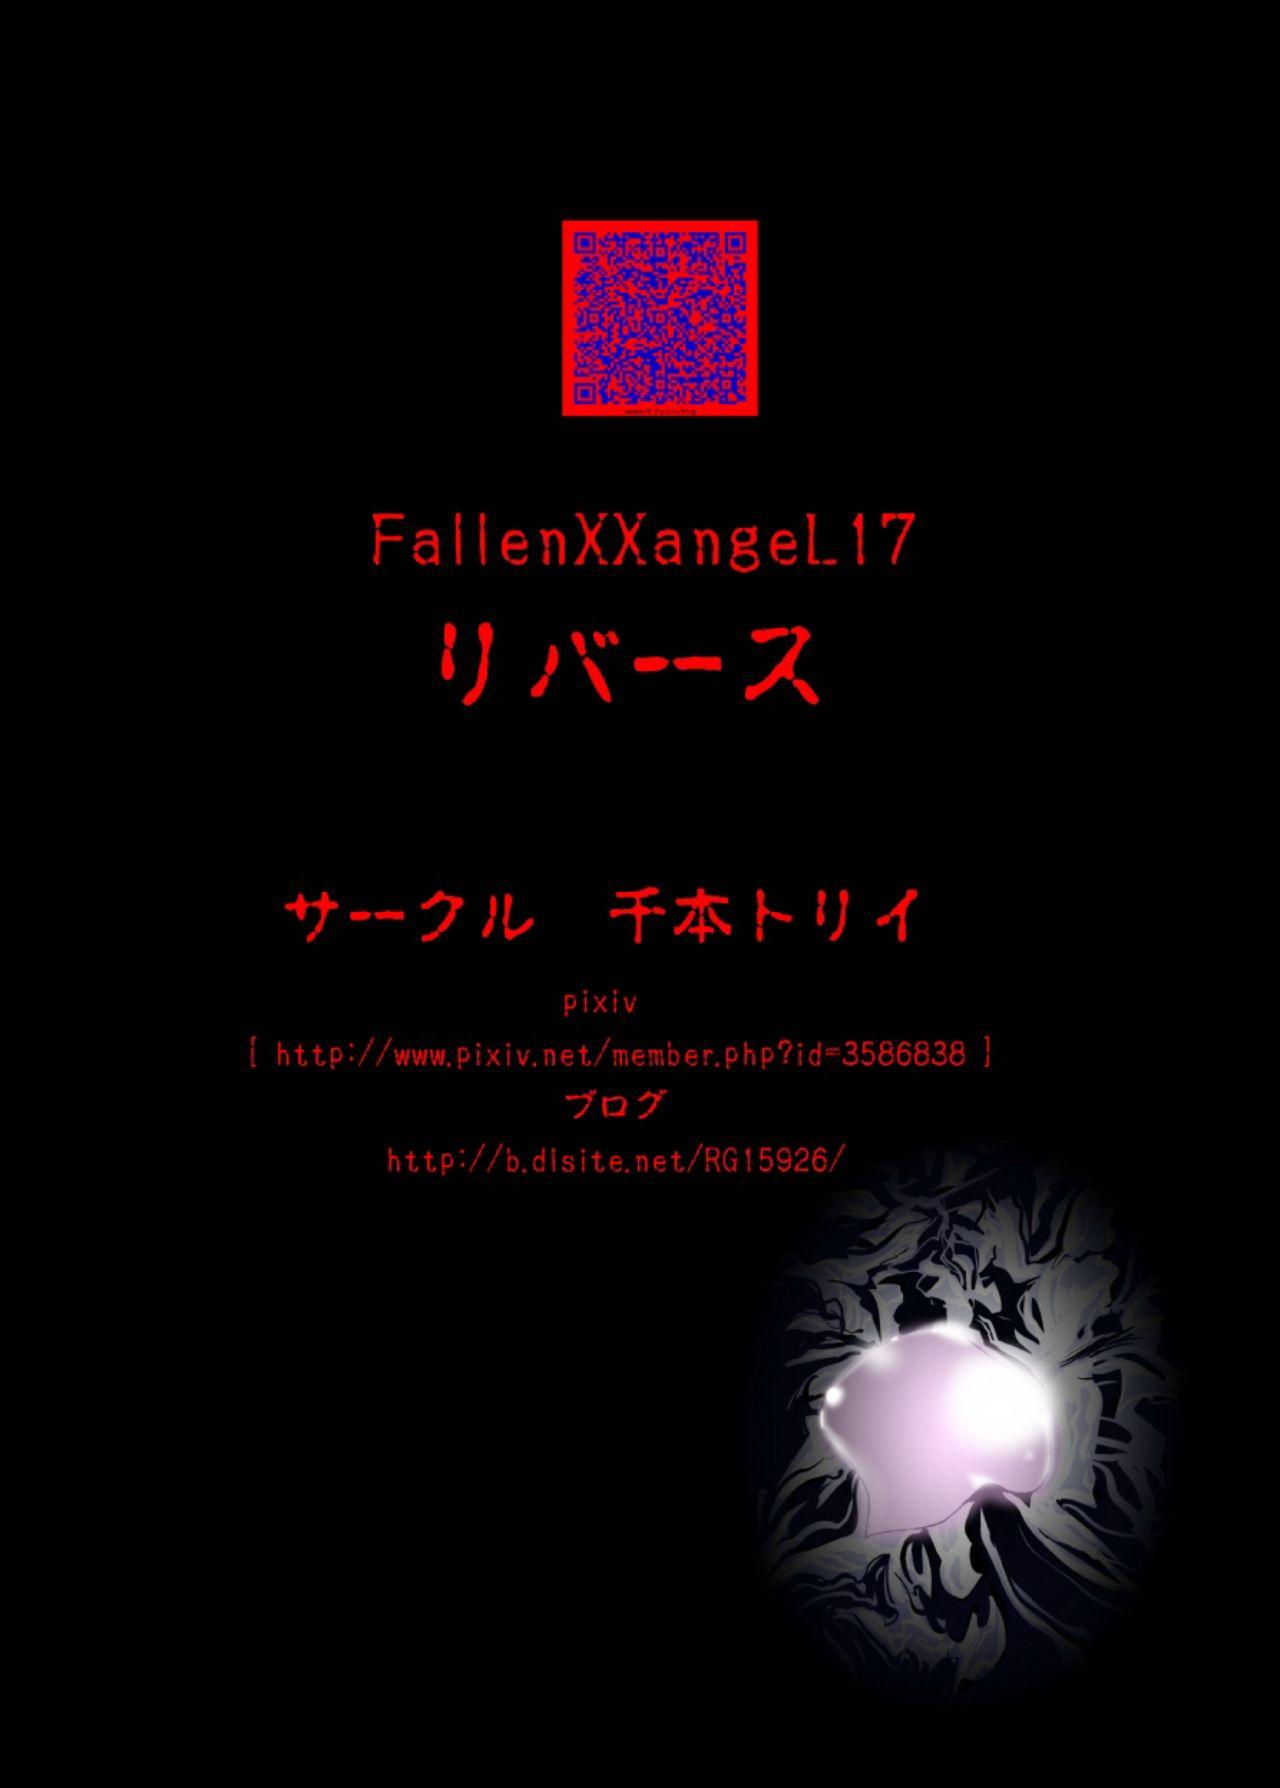 Fallen XX angeL 17 REBIRTH 47